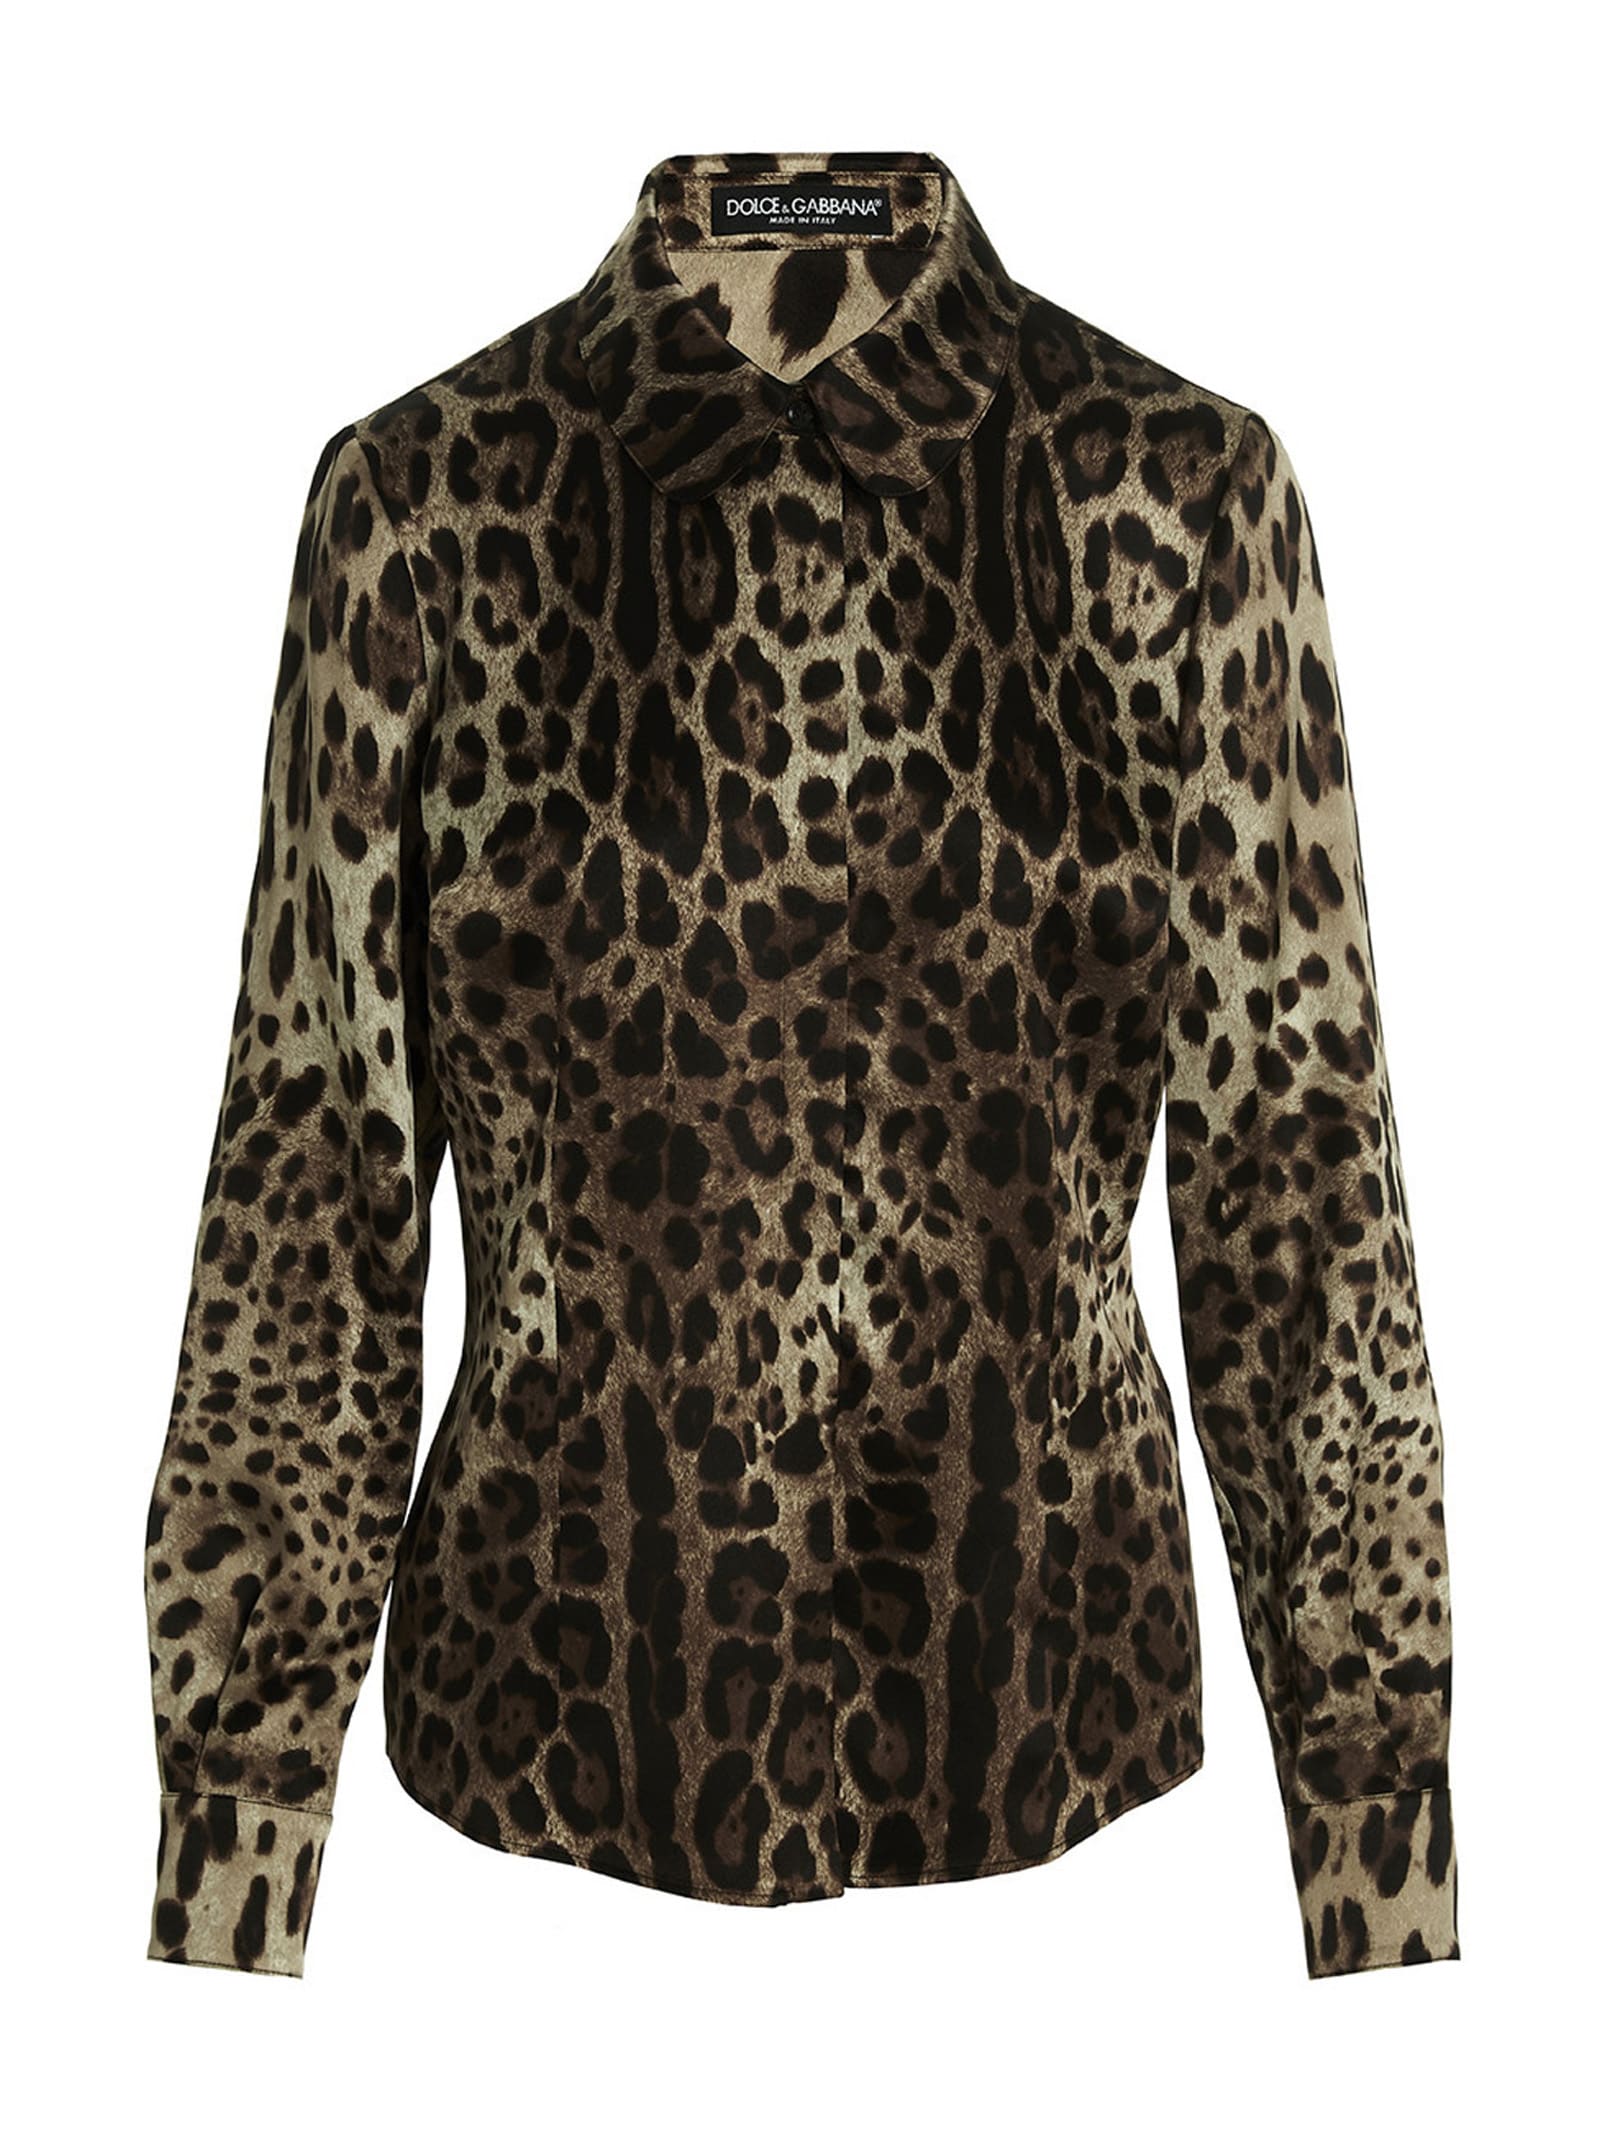 Dolce & Gabbana Animal Print Shirt In Brown | ModeSens